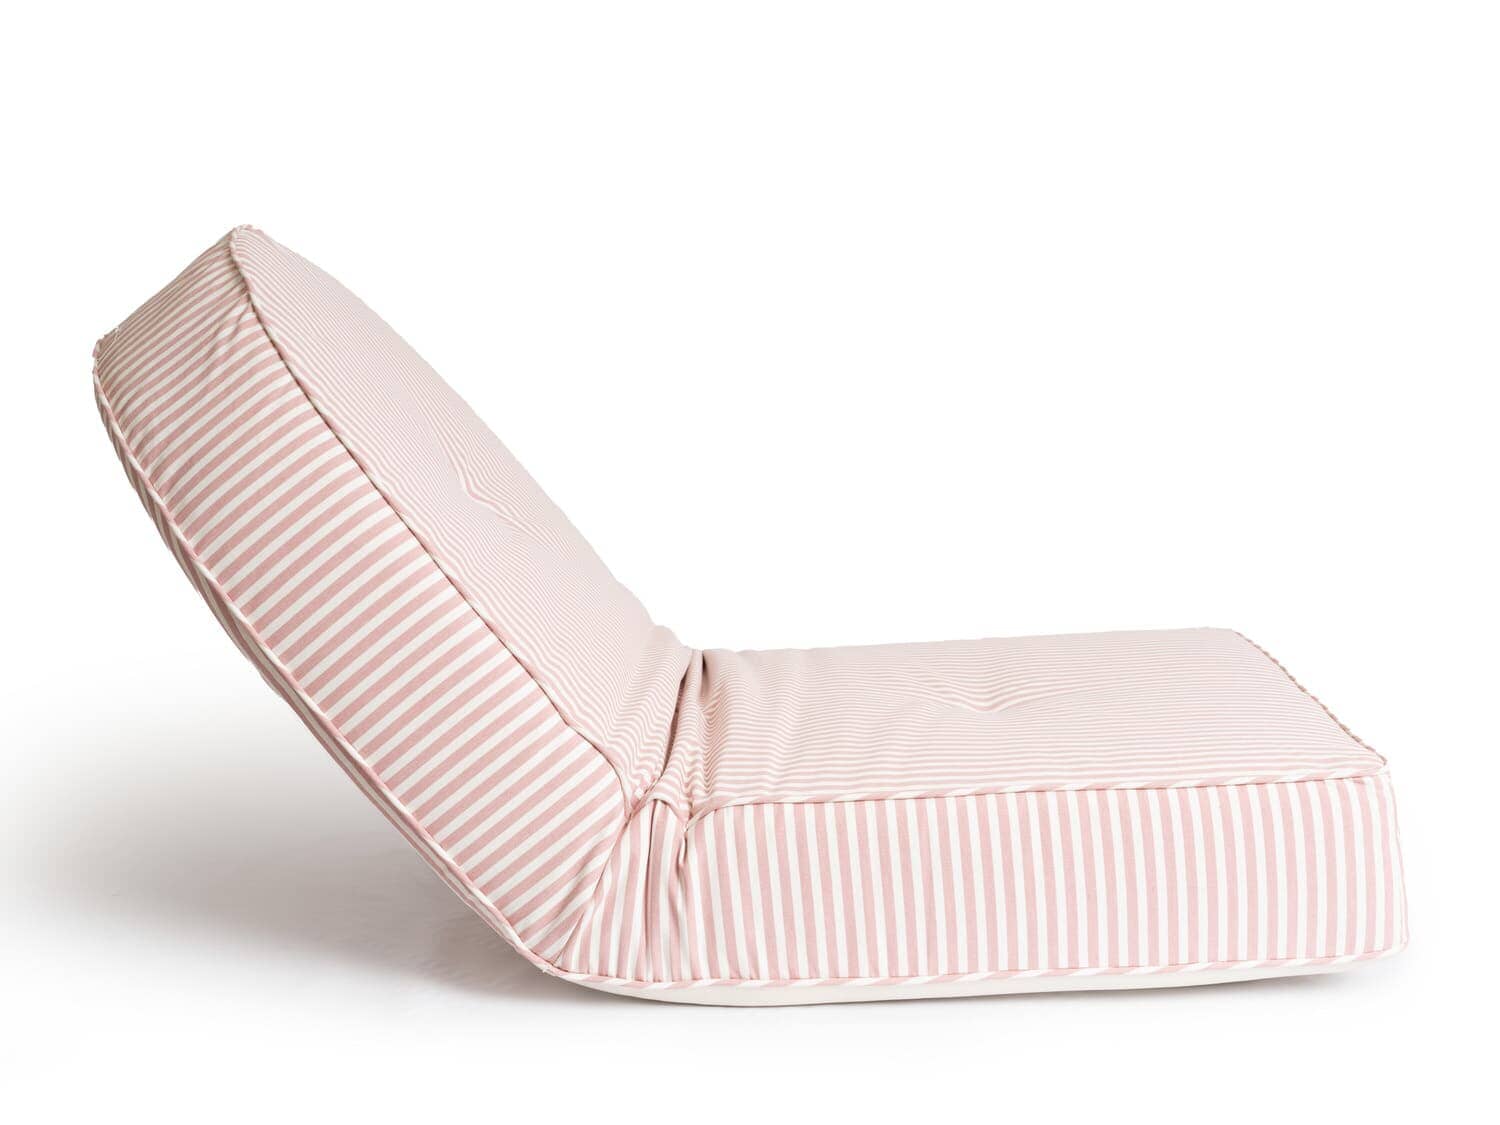 Studio image of pink reclining pillow lounger